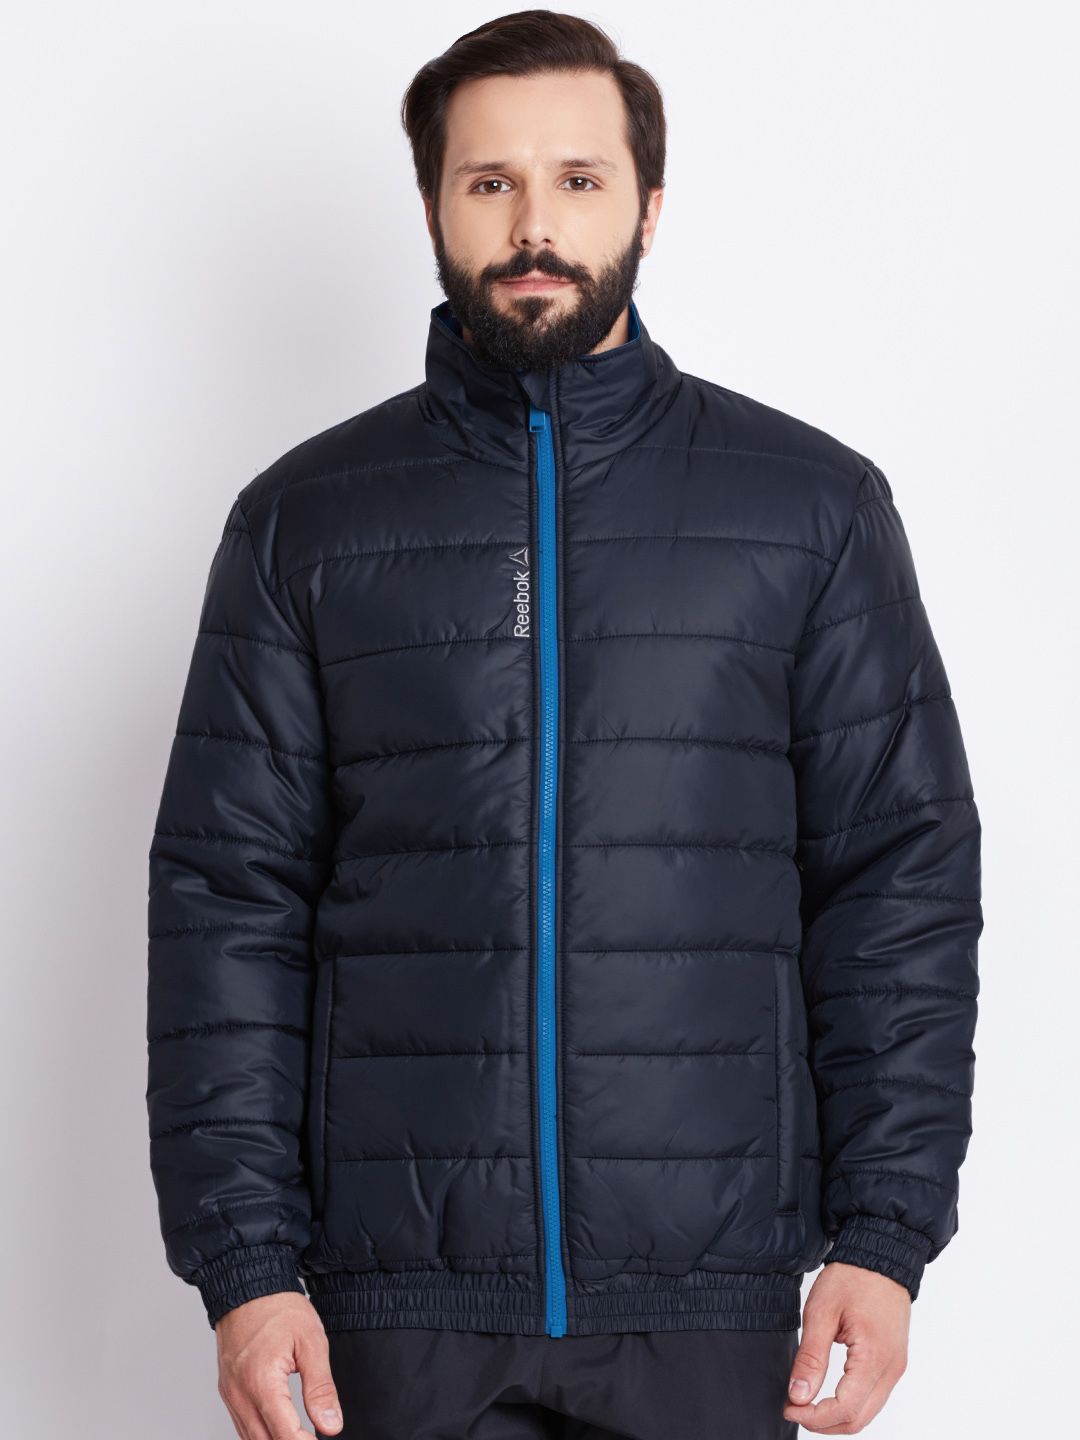 reebok winter jacket price